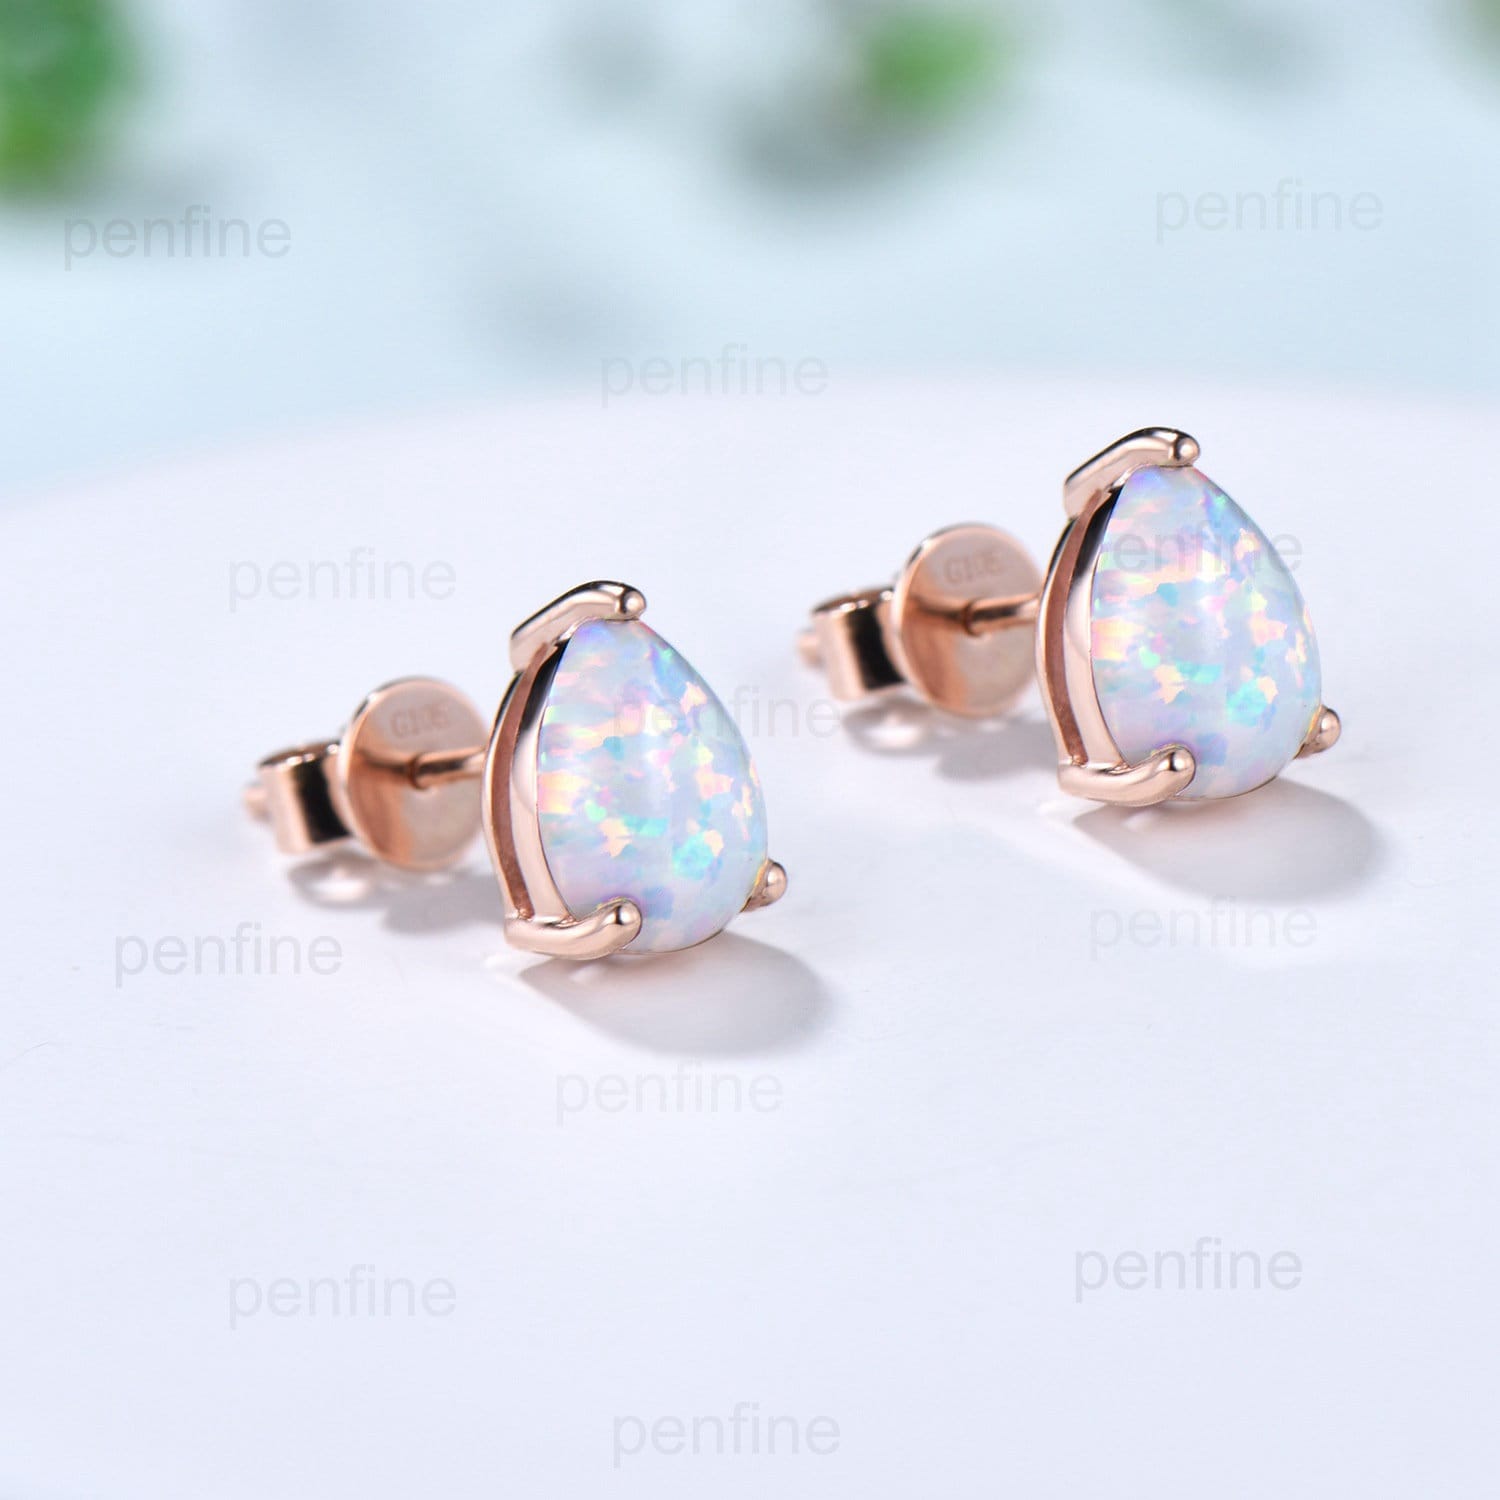 Dainty fire opal earrings solitaire pear shaped white opal stud earrings rose gold minimalist October birthstone Handmade Proposal Gift - PENFINE